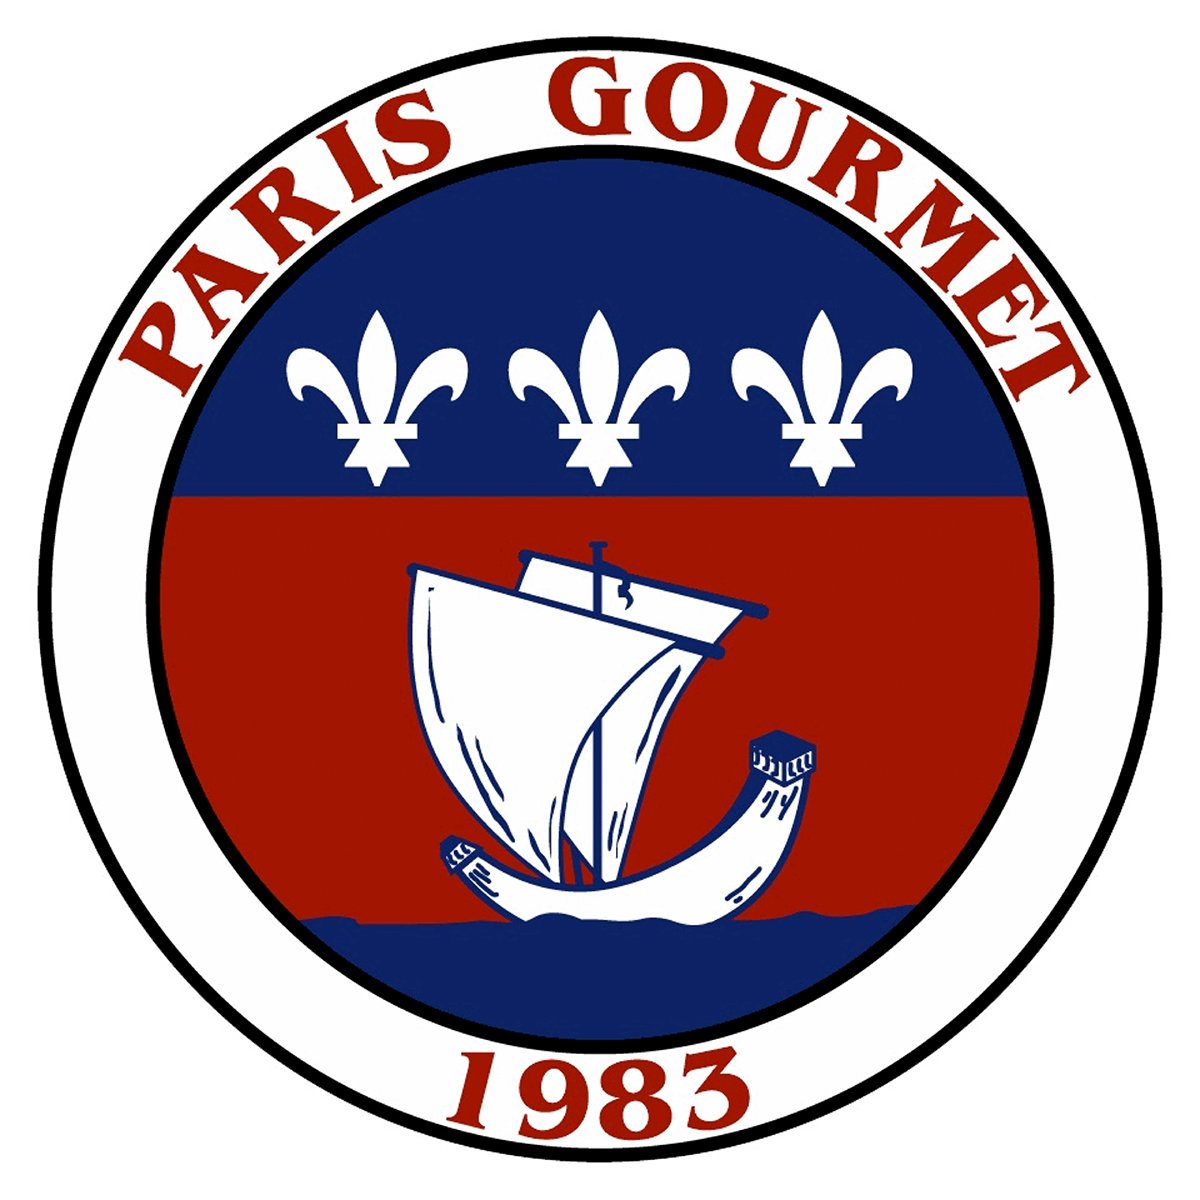 Paris Gourmet logo 300dpi.jpg